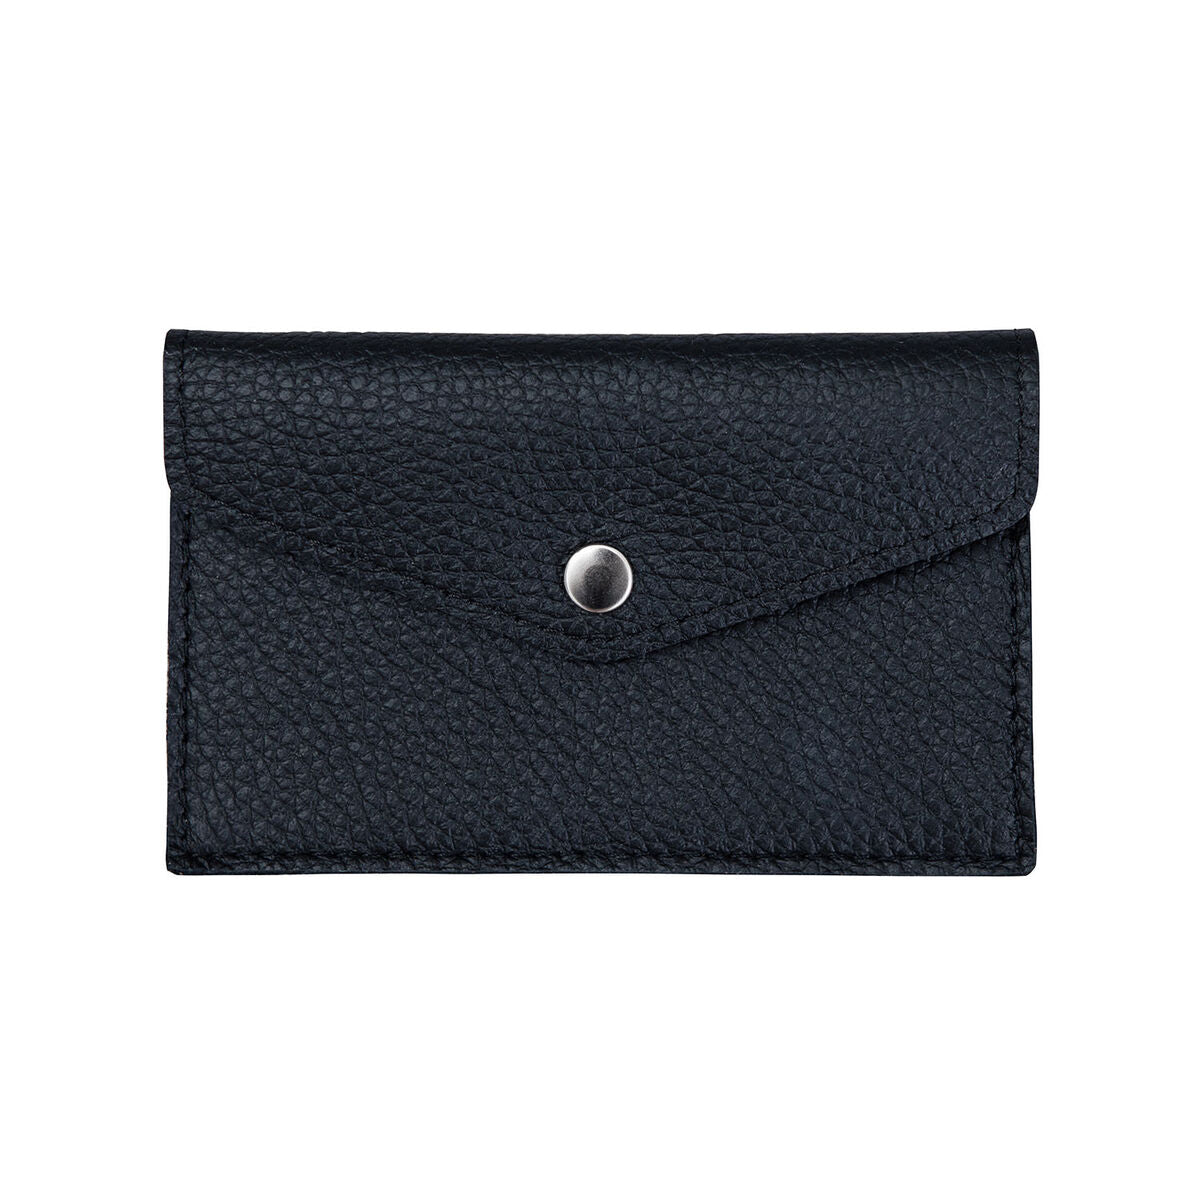 Miiko Card Wallet Leather